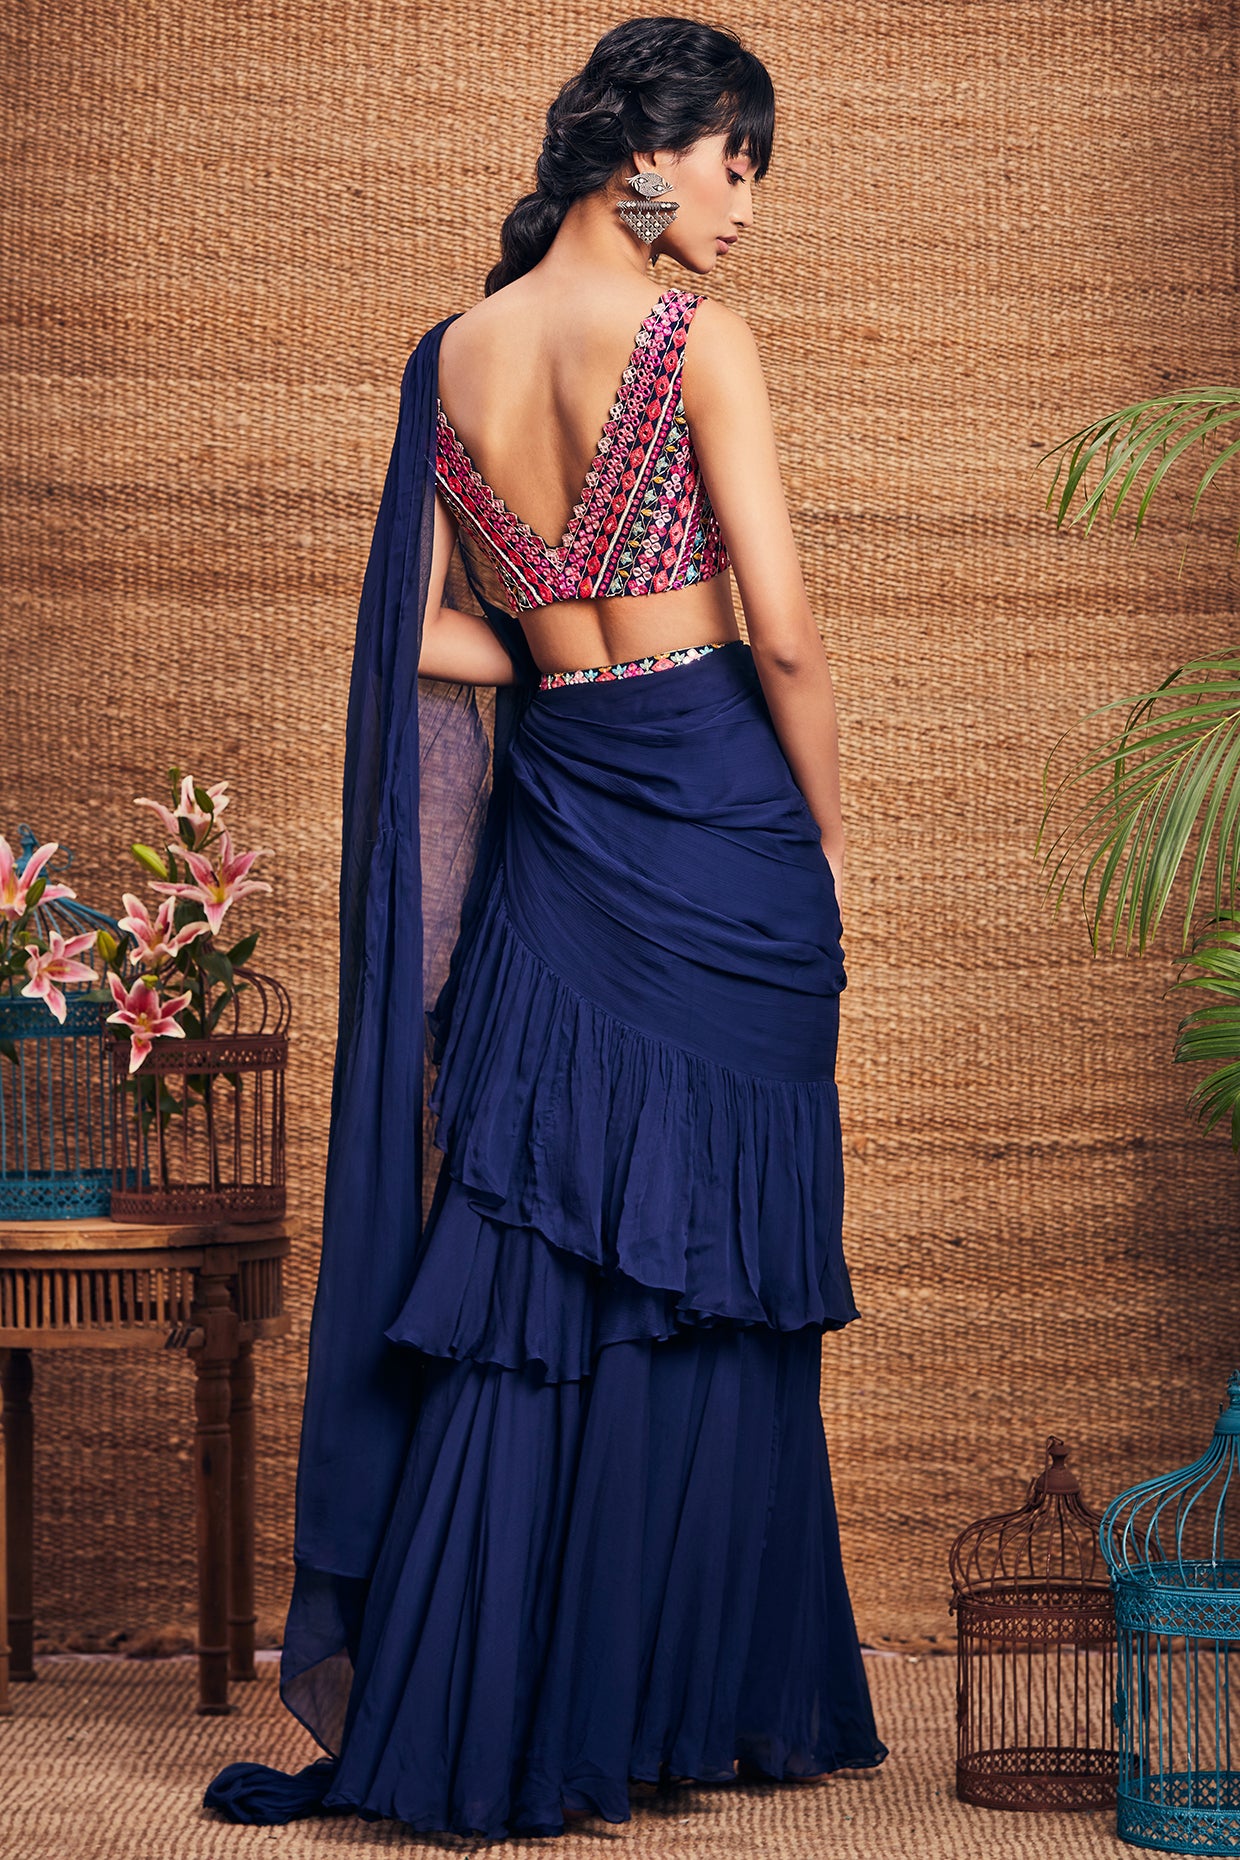 Georgette Designer Lehenga Saree, Party Wear at Rs 1499 in Surat | ID:  2853075693055